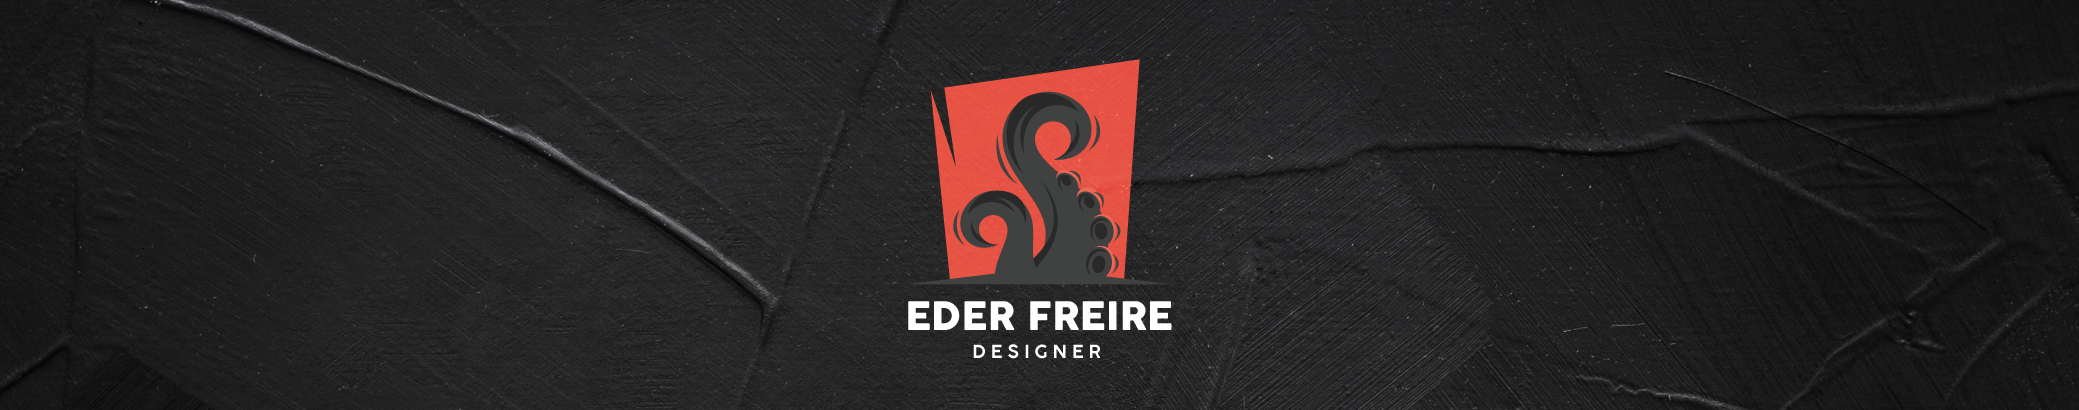 Eder Dias's profile banner